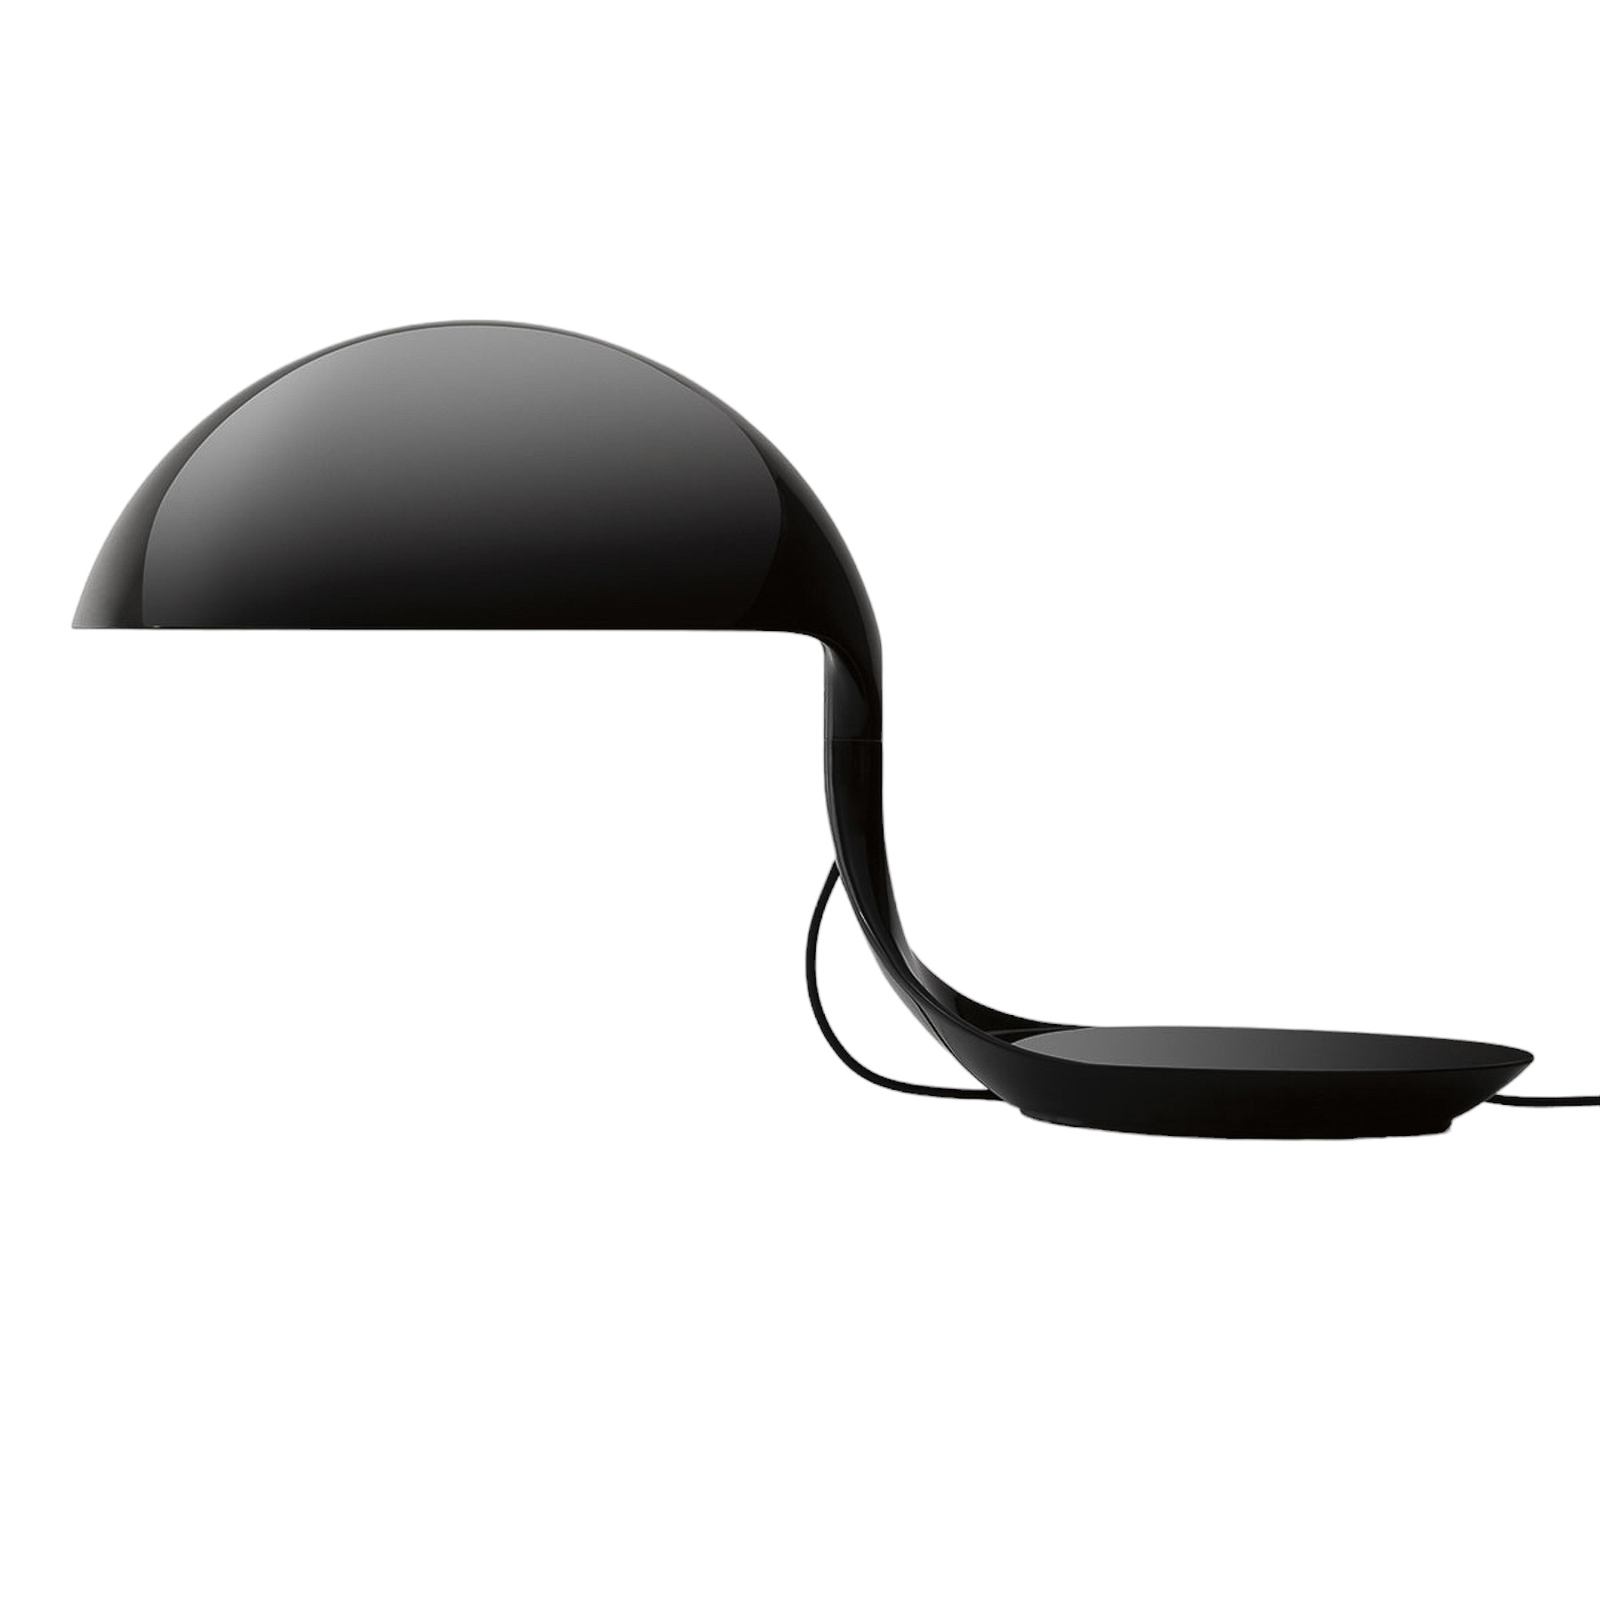 "Martinelli Luce Cobra" - Retro stalinė lempa juoda